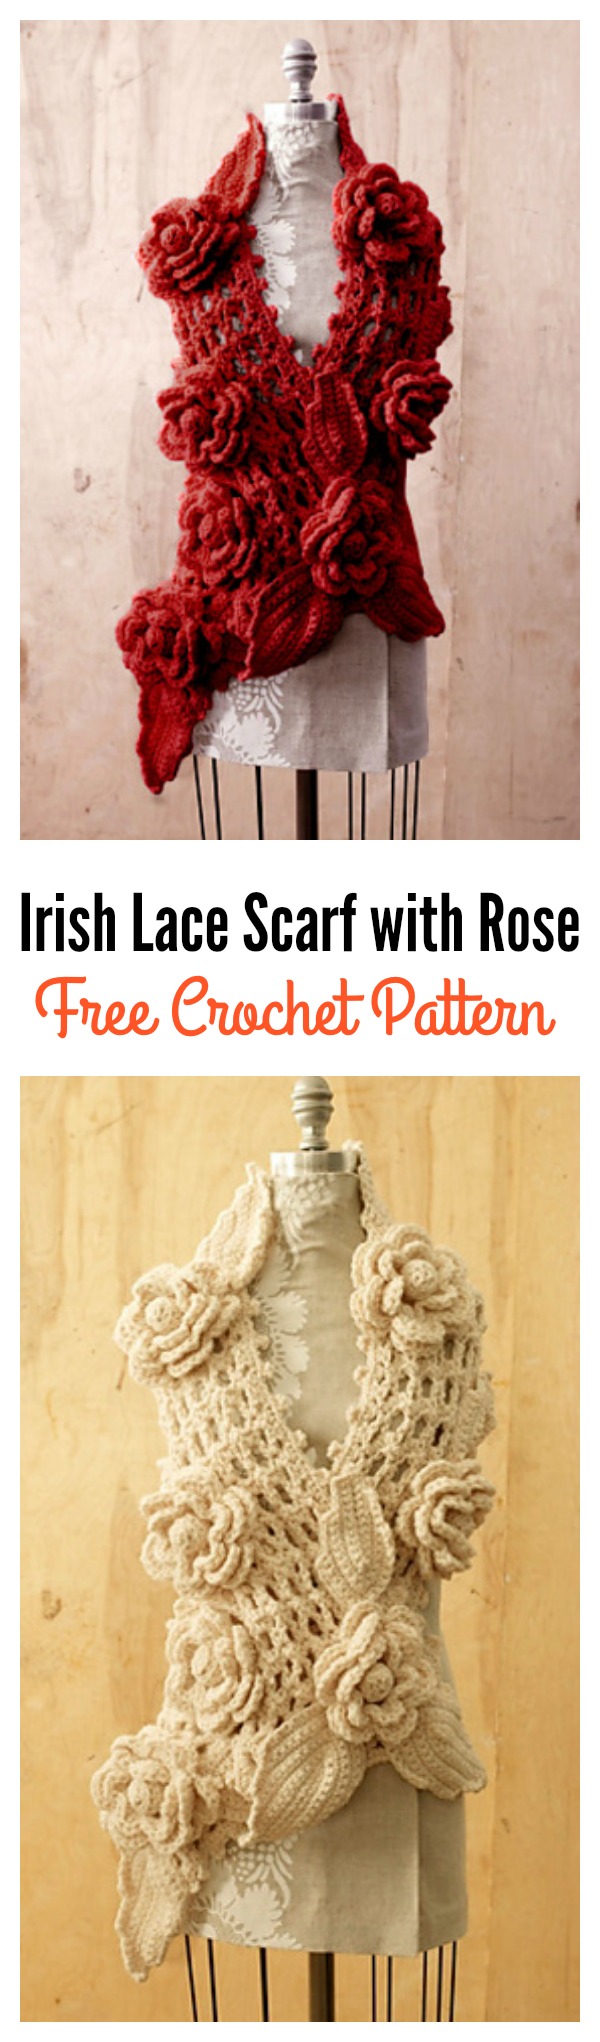 Crochet Irish Lace Scarf with Rose Free Pattern